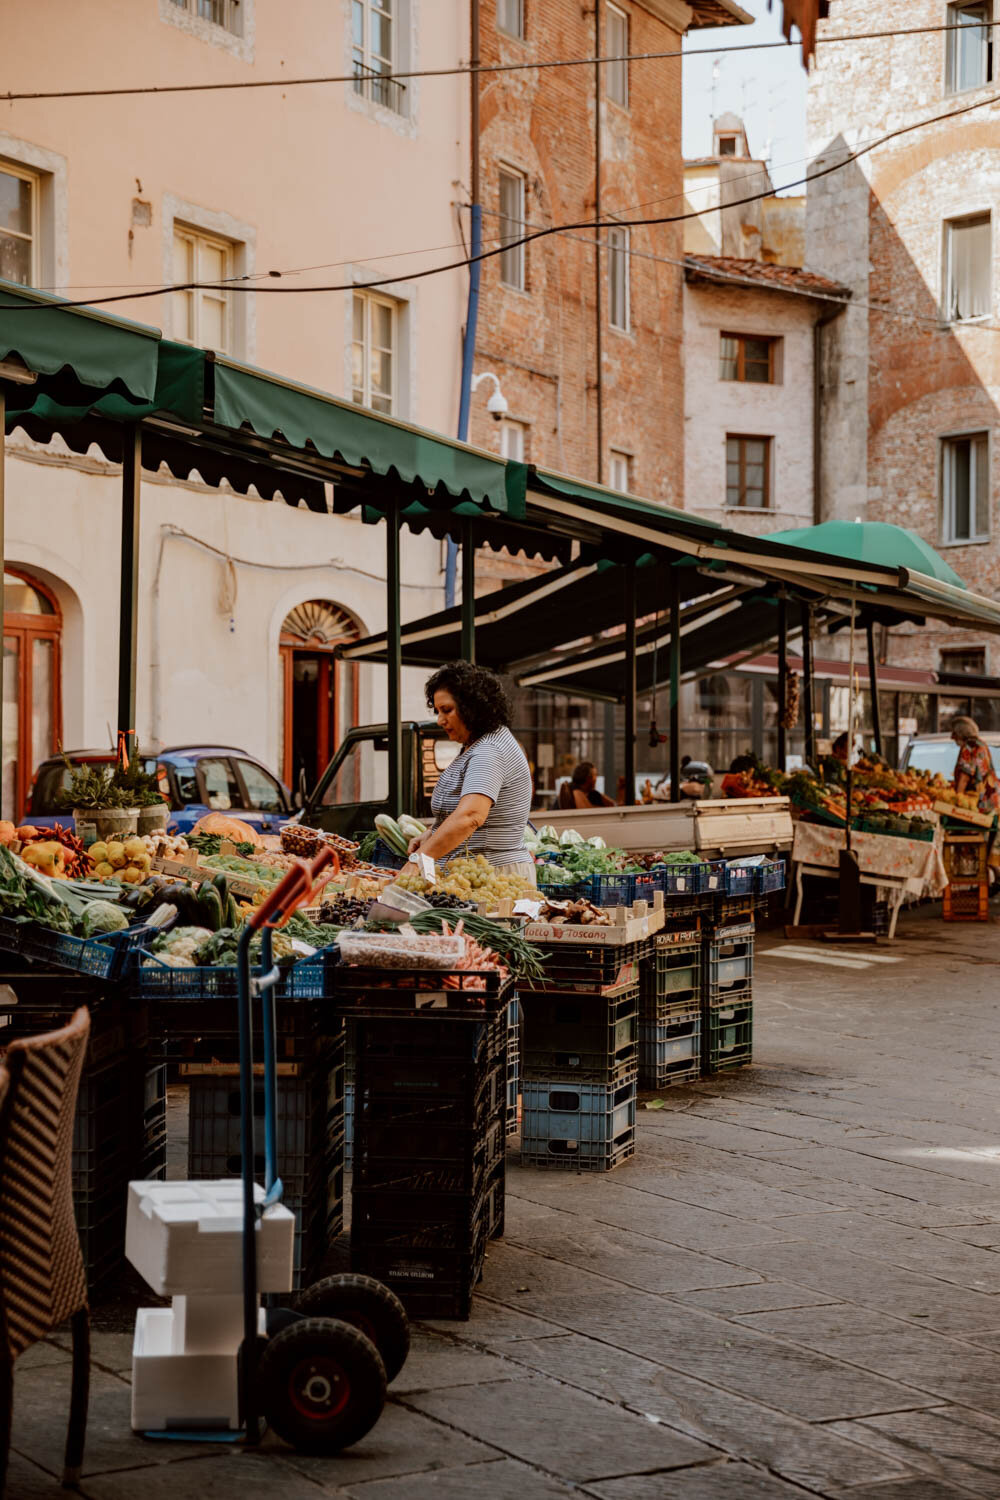 market stall seller and produce at mercato delle vettovaglie